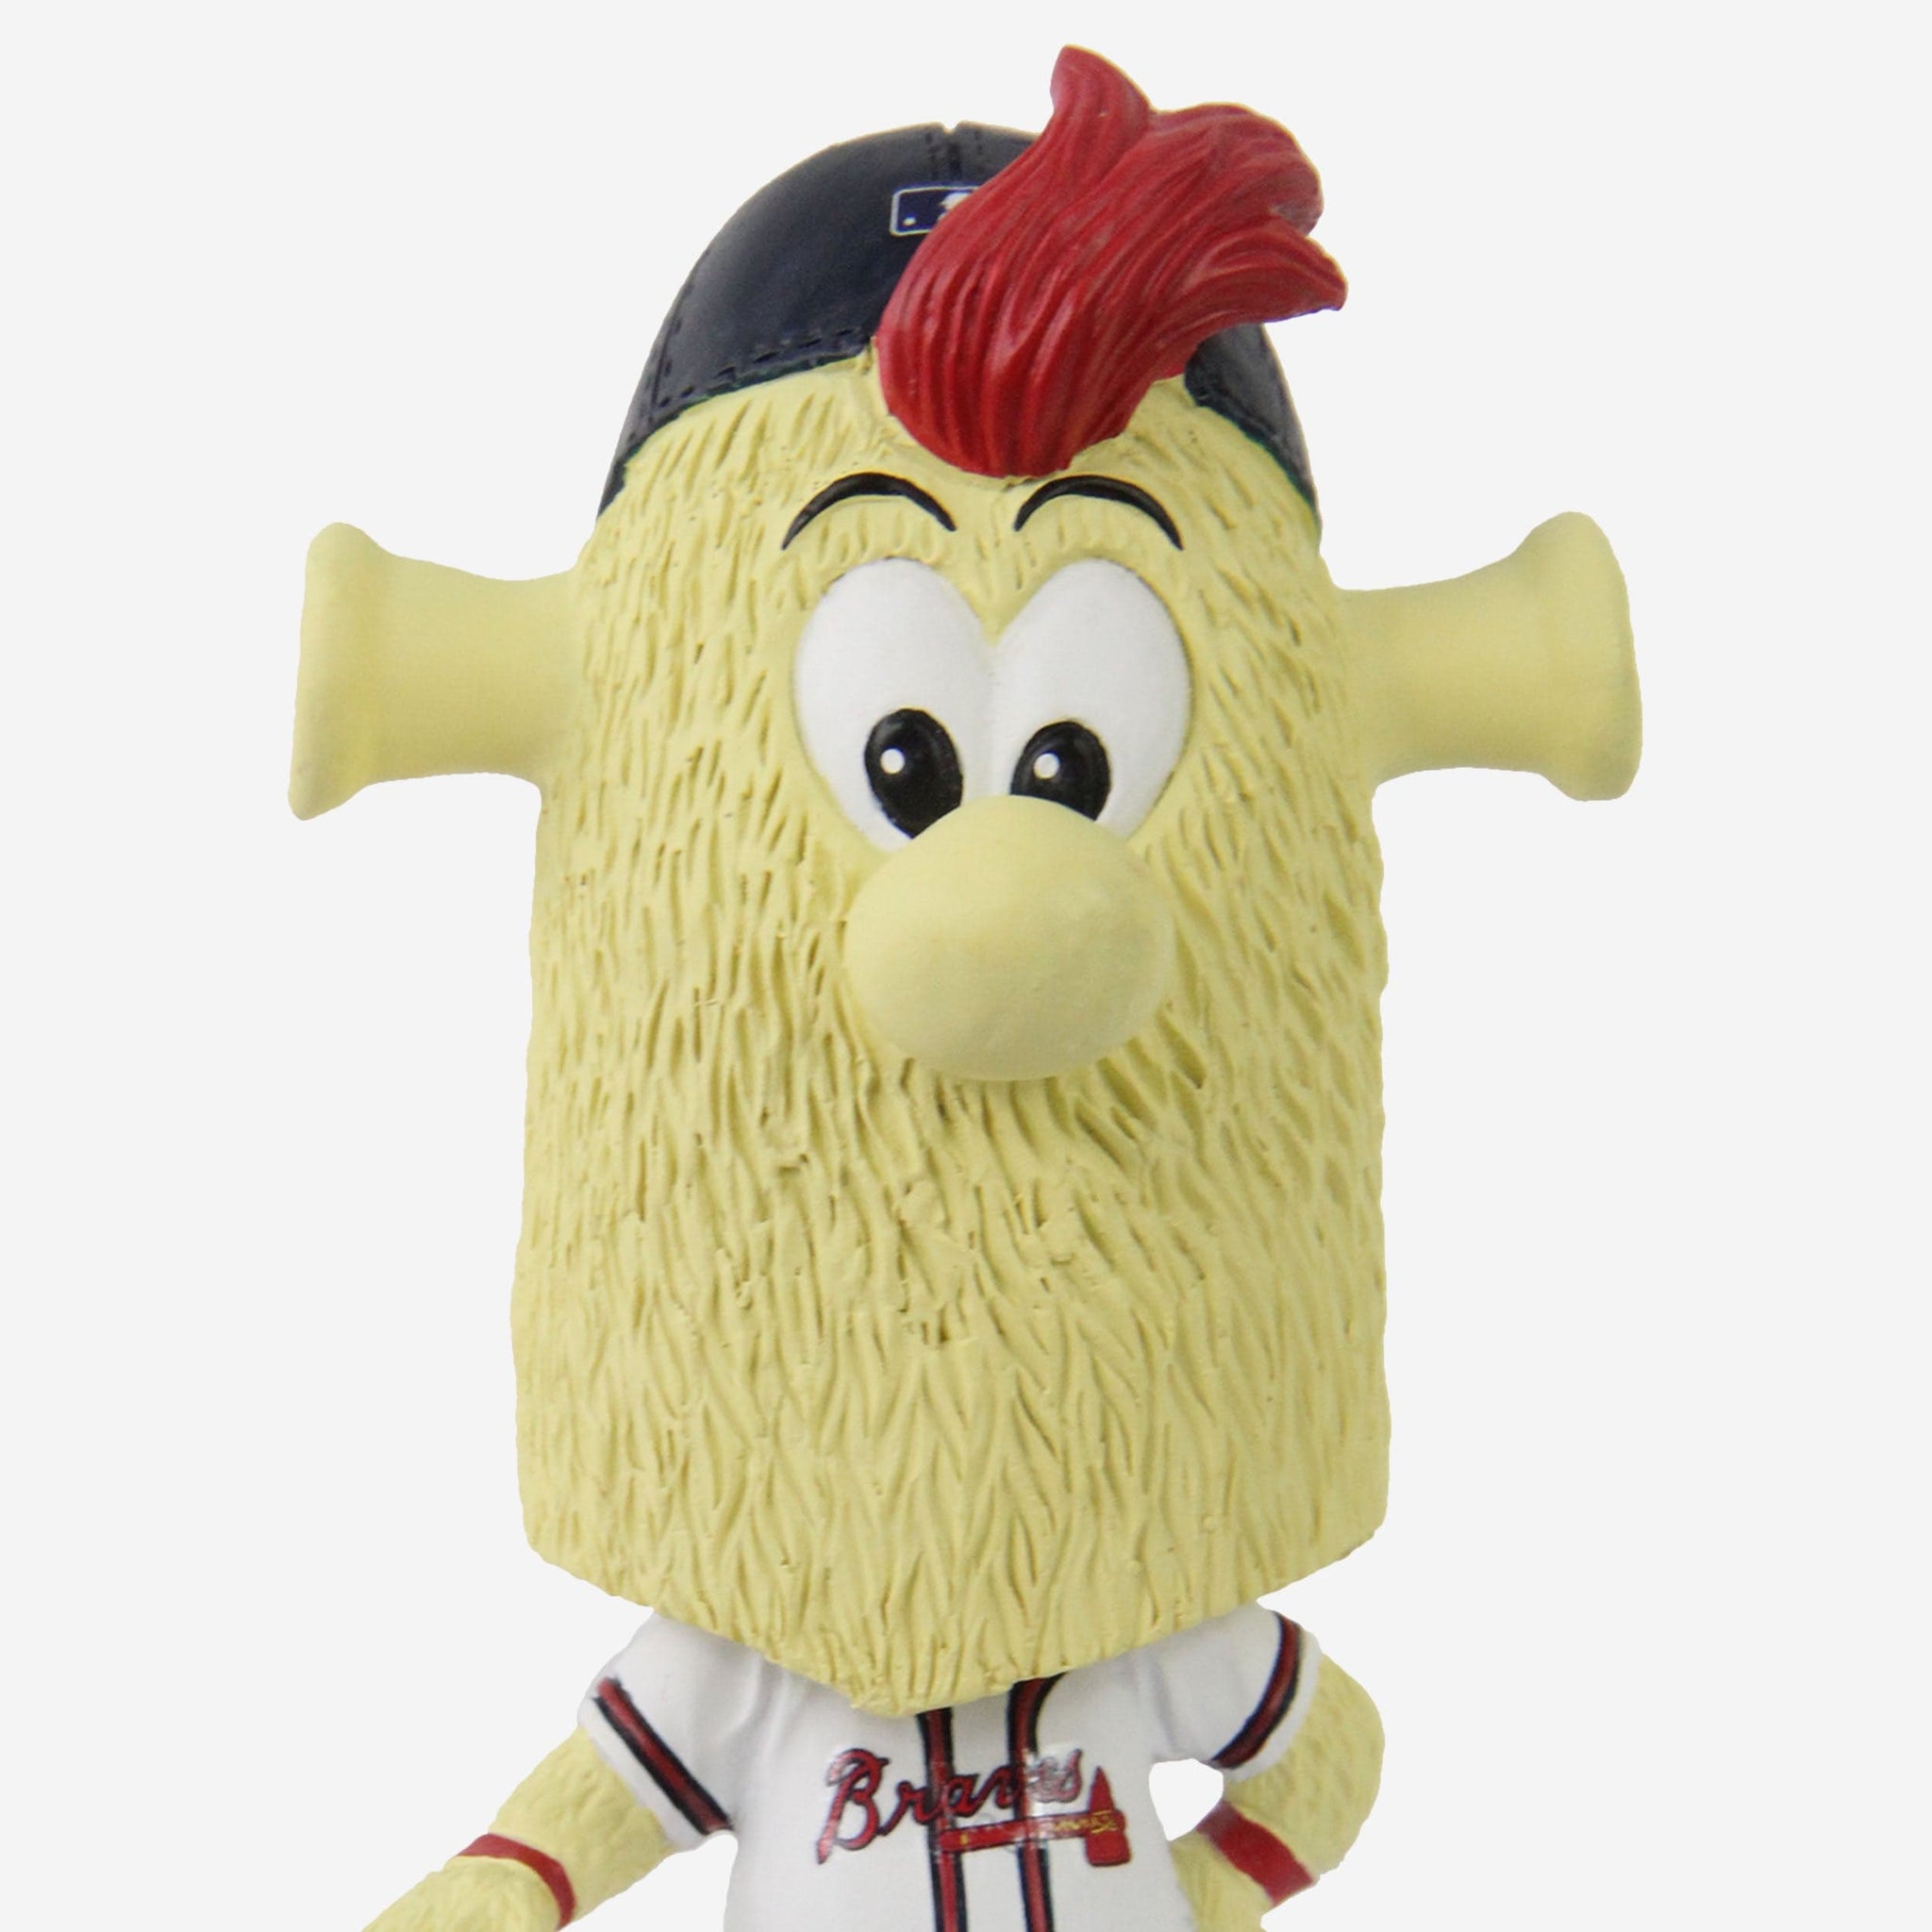 BLOOPER Atlanta Braves Mascot Mini Bobblehead 2022 Limited Edition #d/360  New*